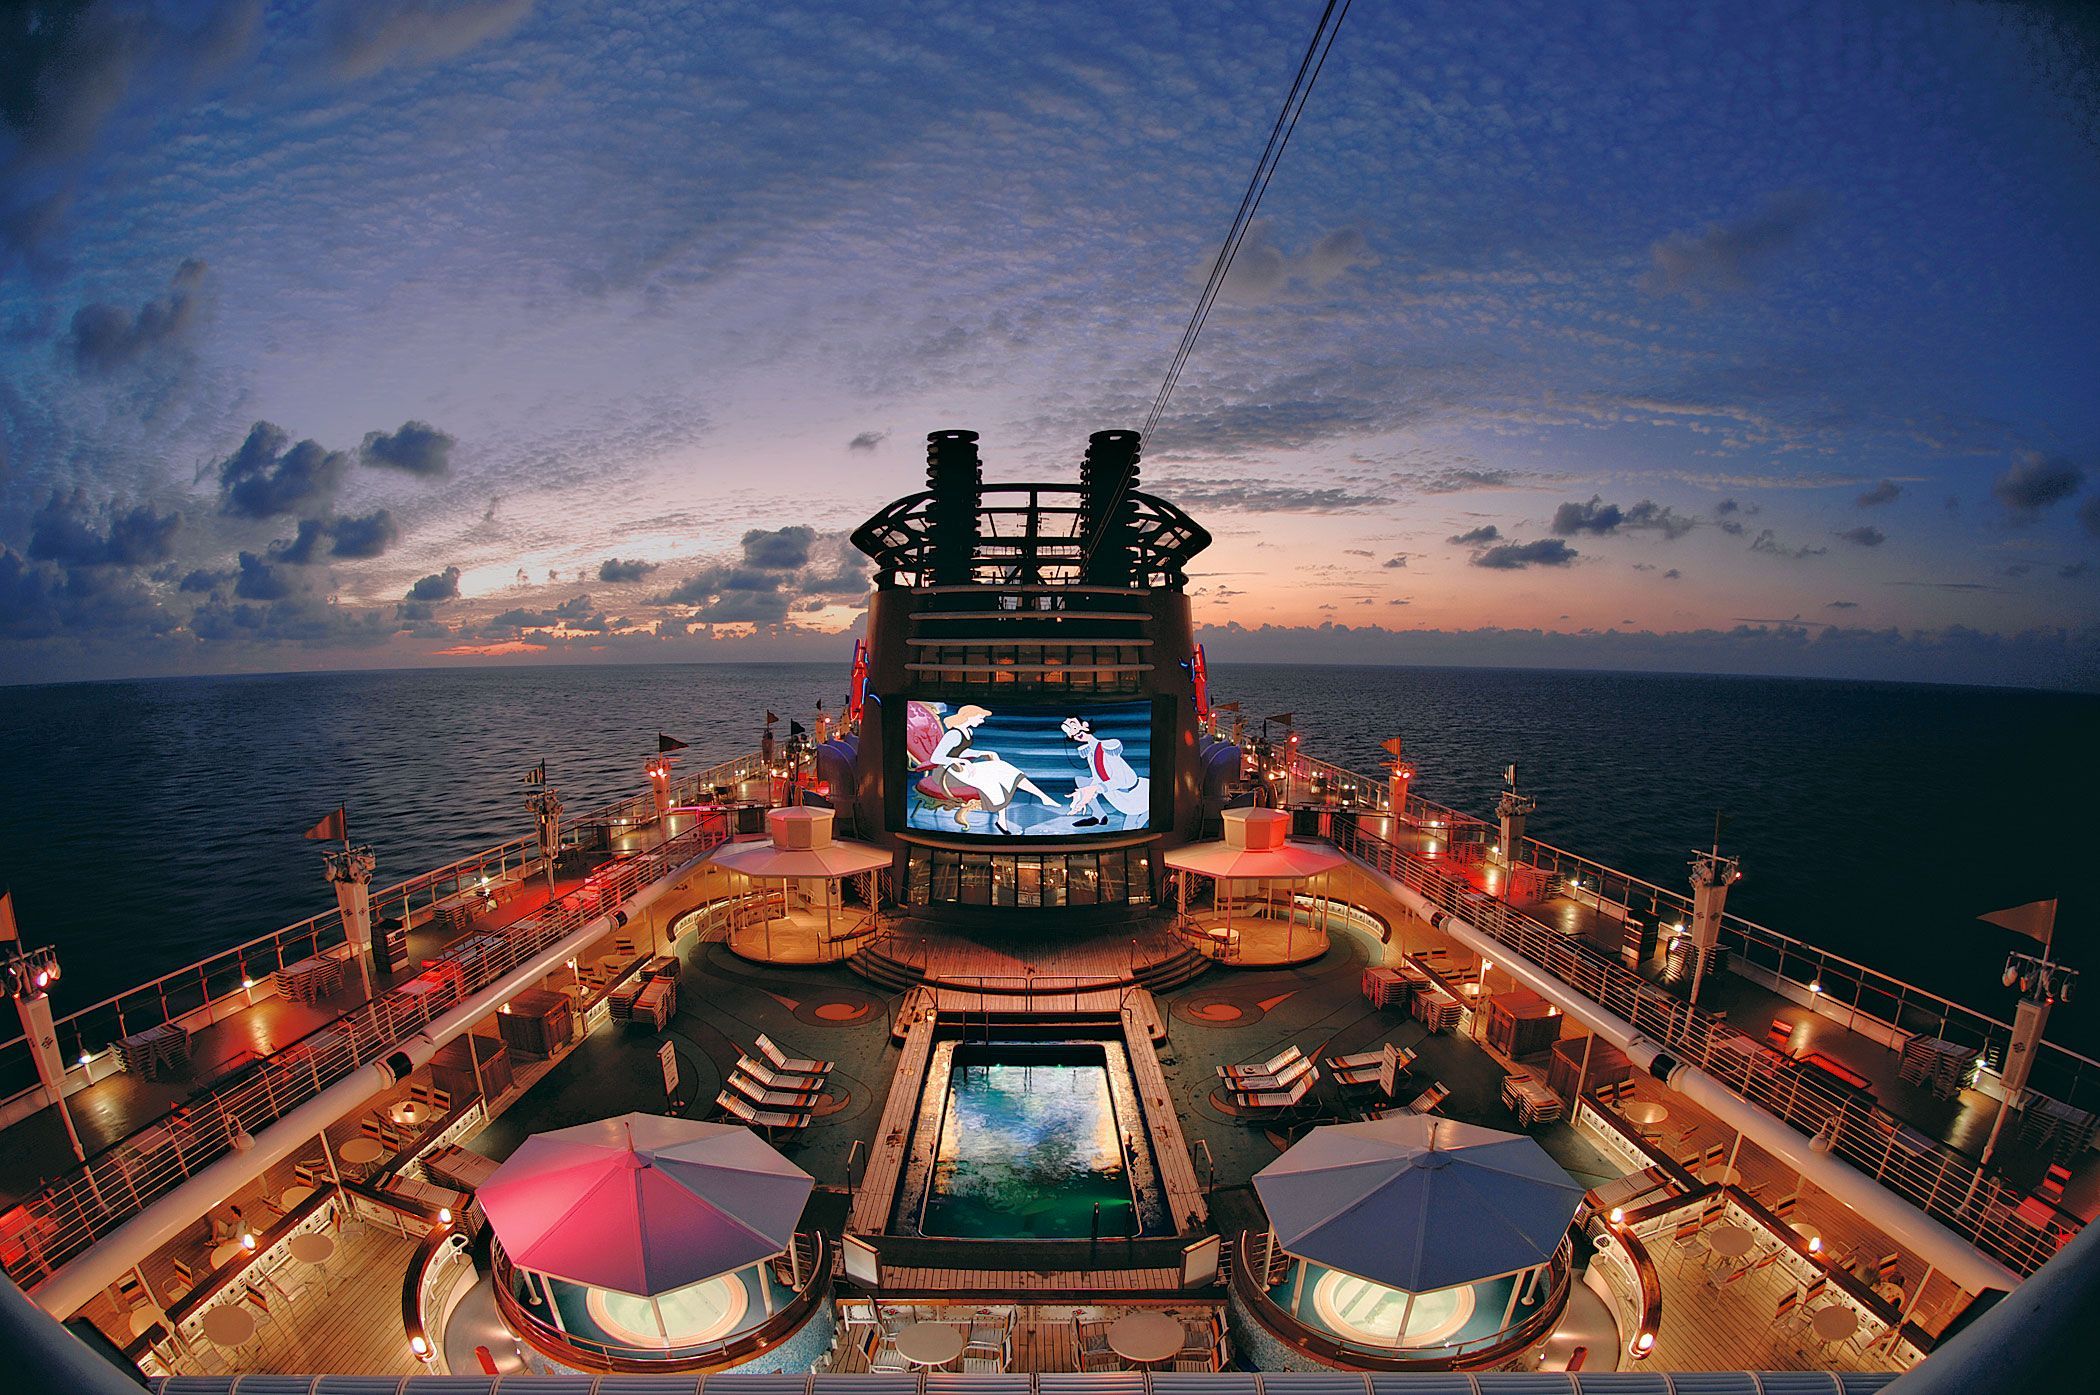 Disney Cruise Ship Wallpapers